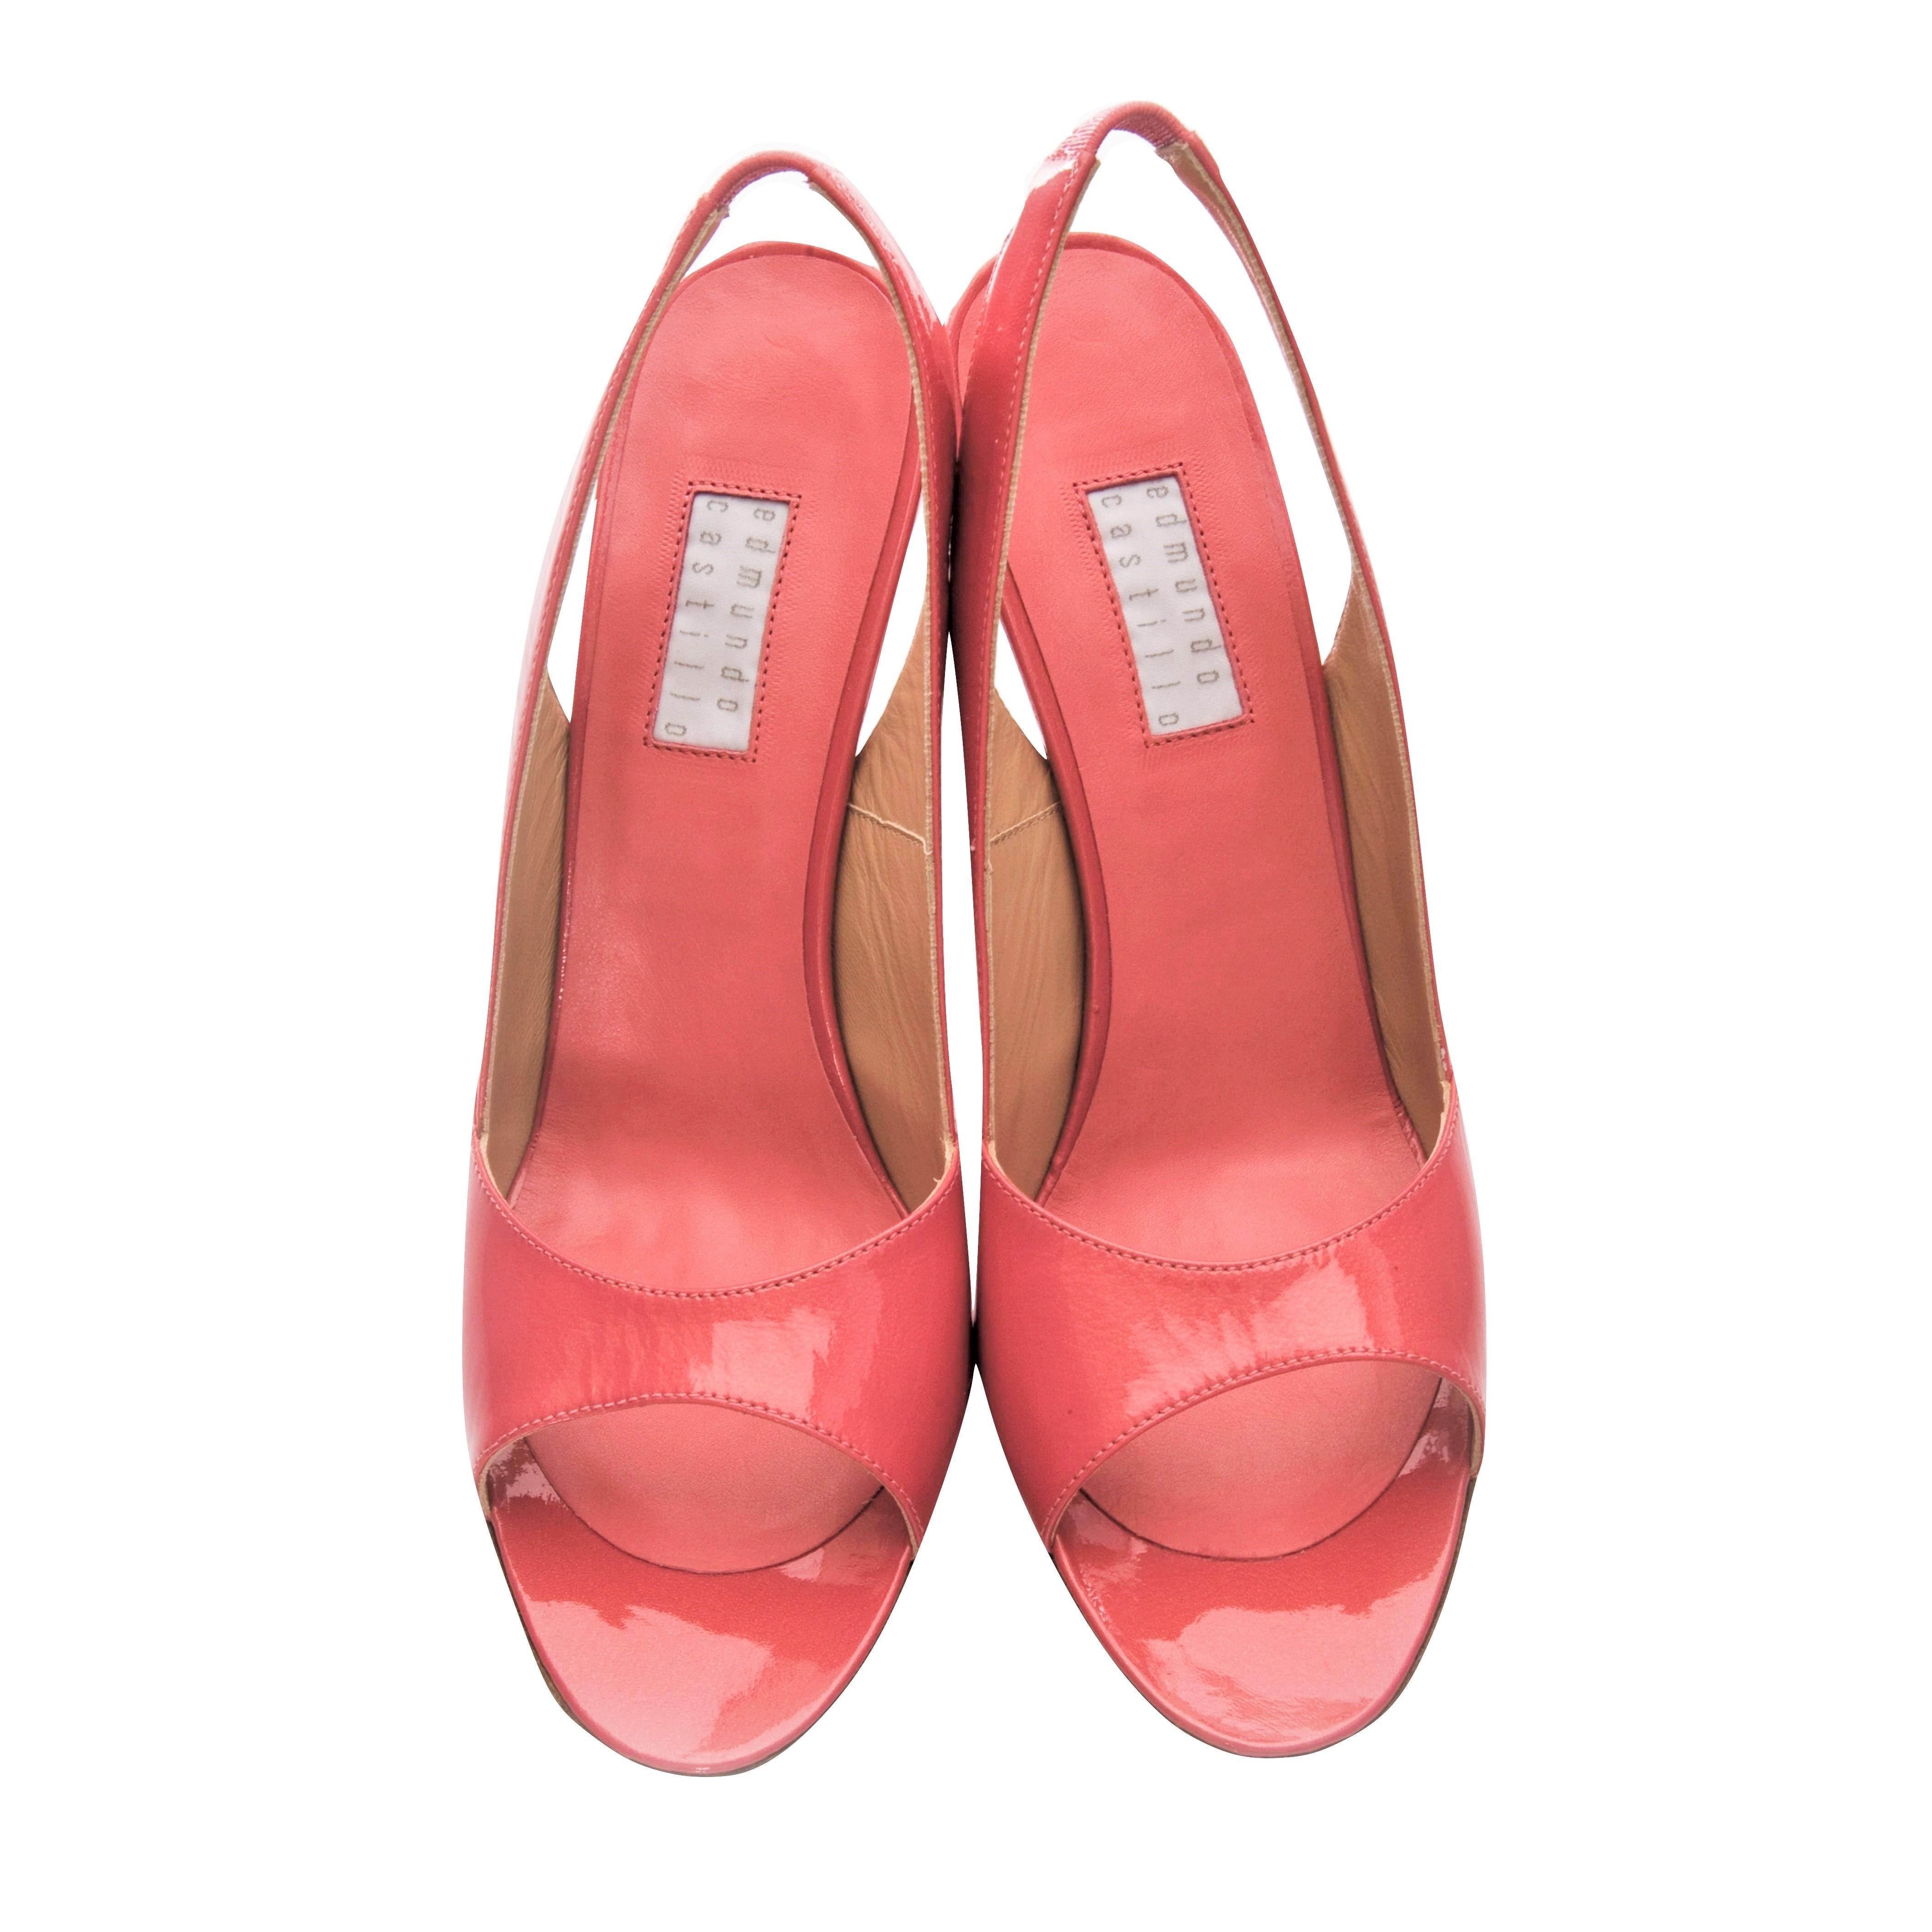 Women's New Edmundo Castillo Coral Patent Leather Sling Heels Sz 8